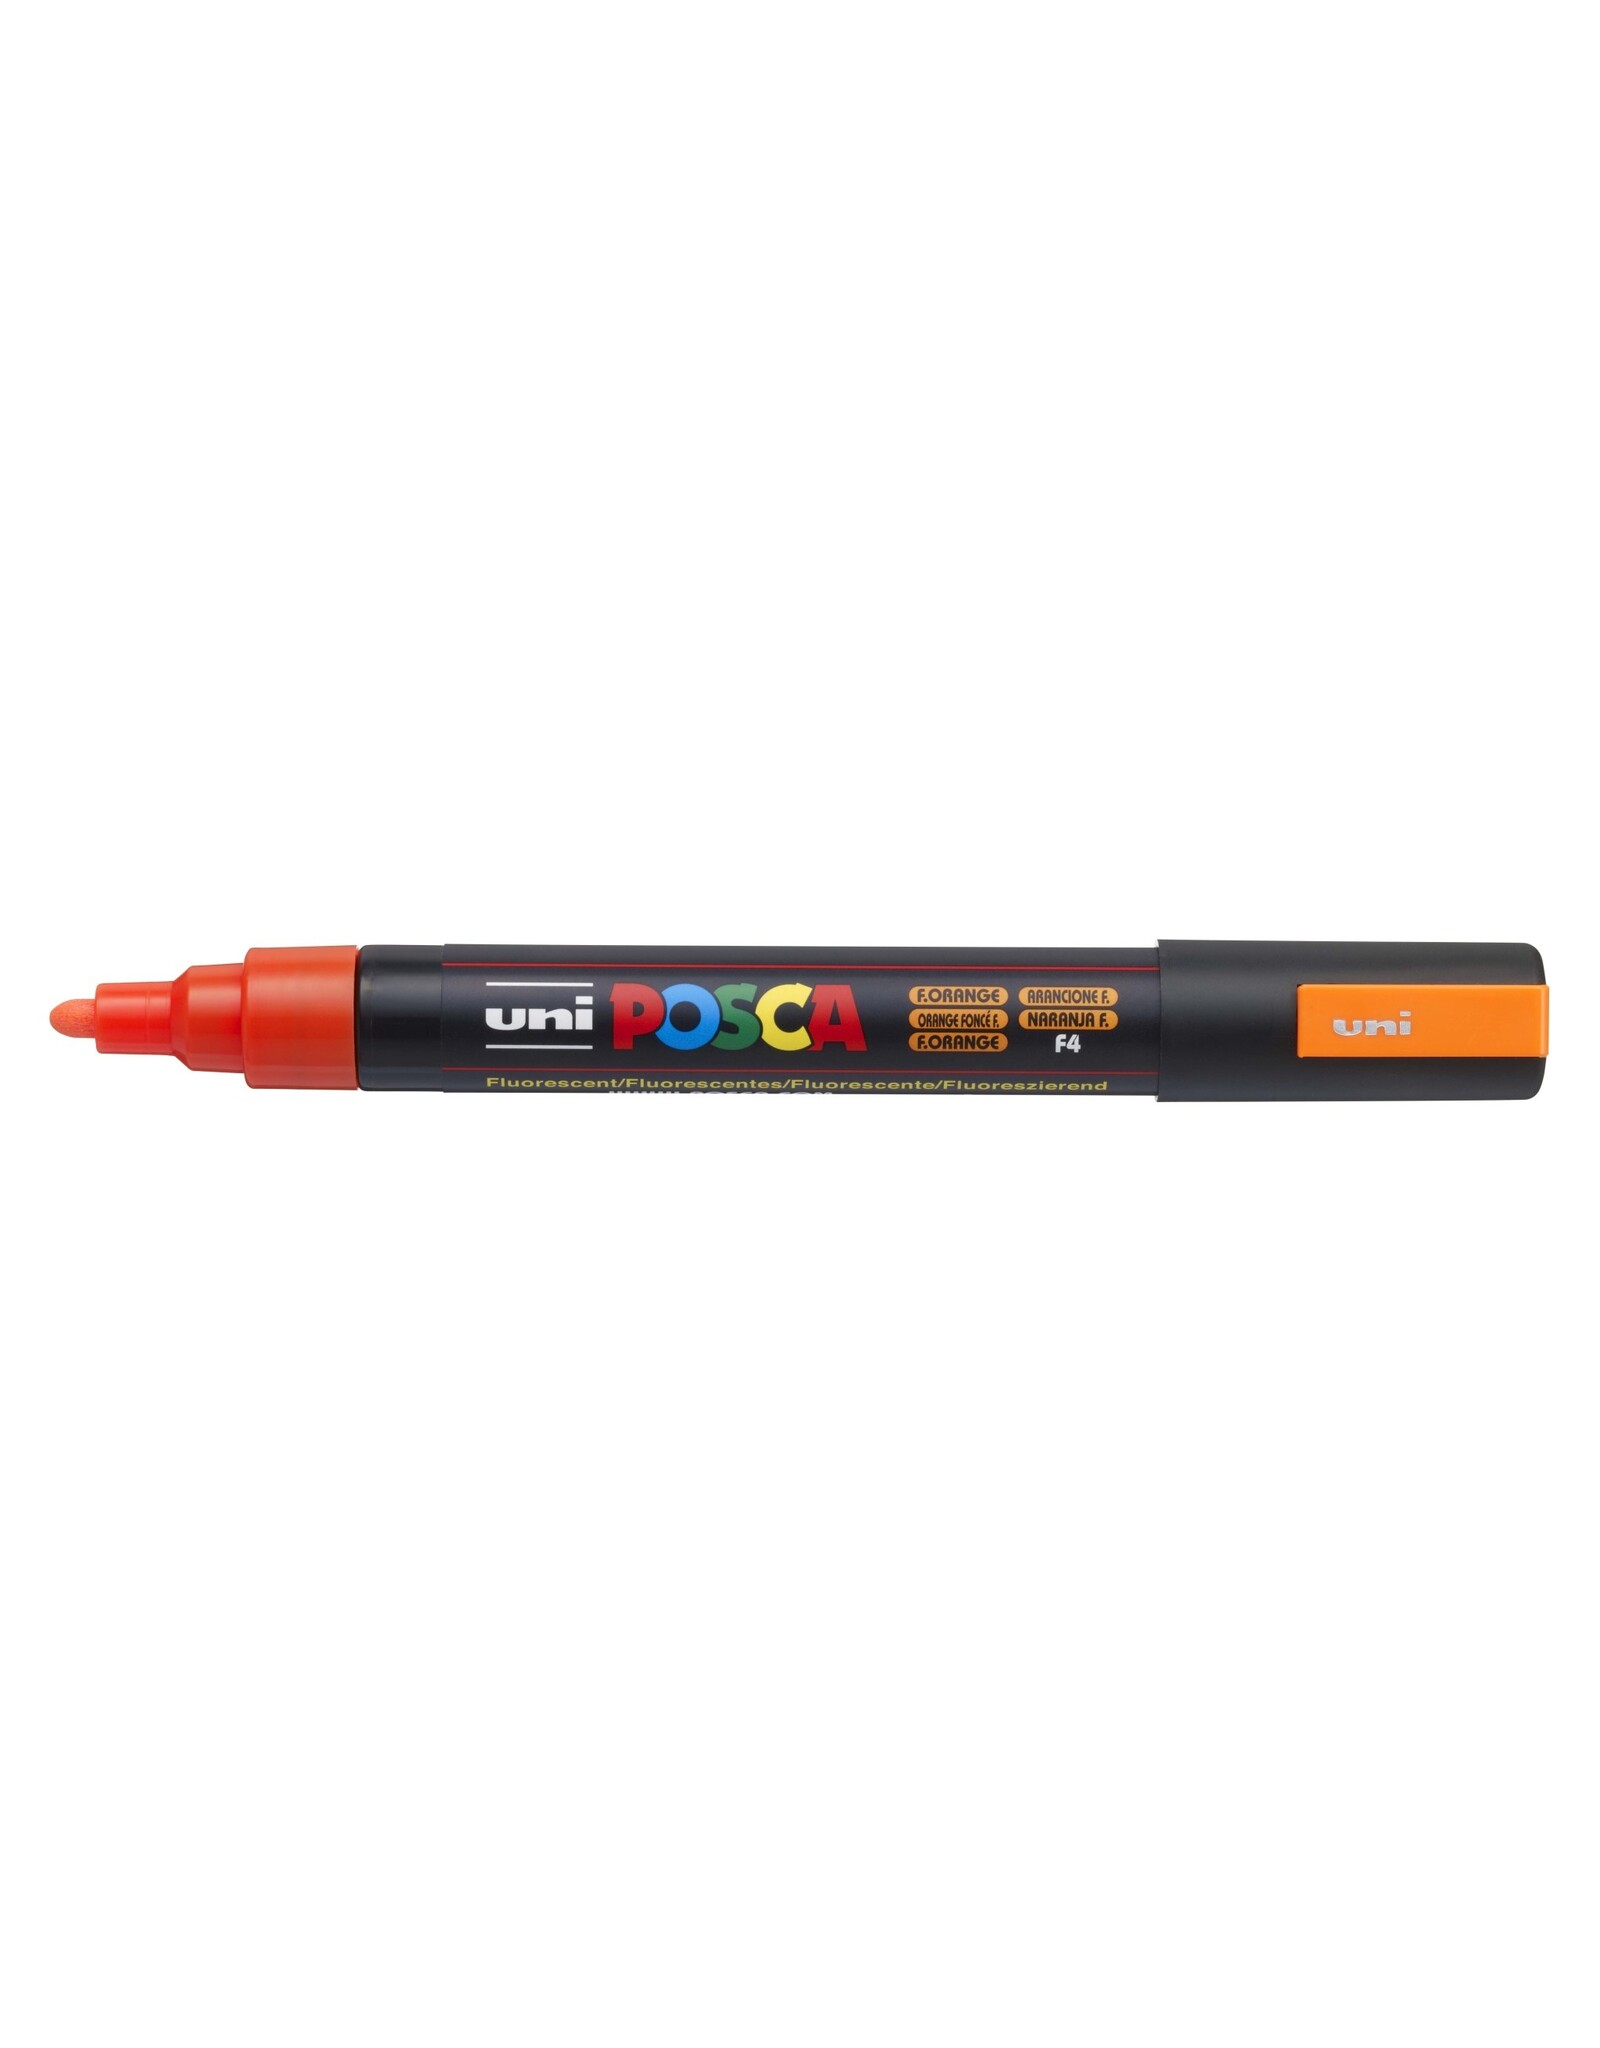 POSCA Uni POSCA Paint Marker, Medium, Fluorescent Orange